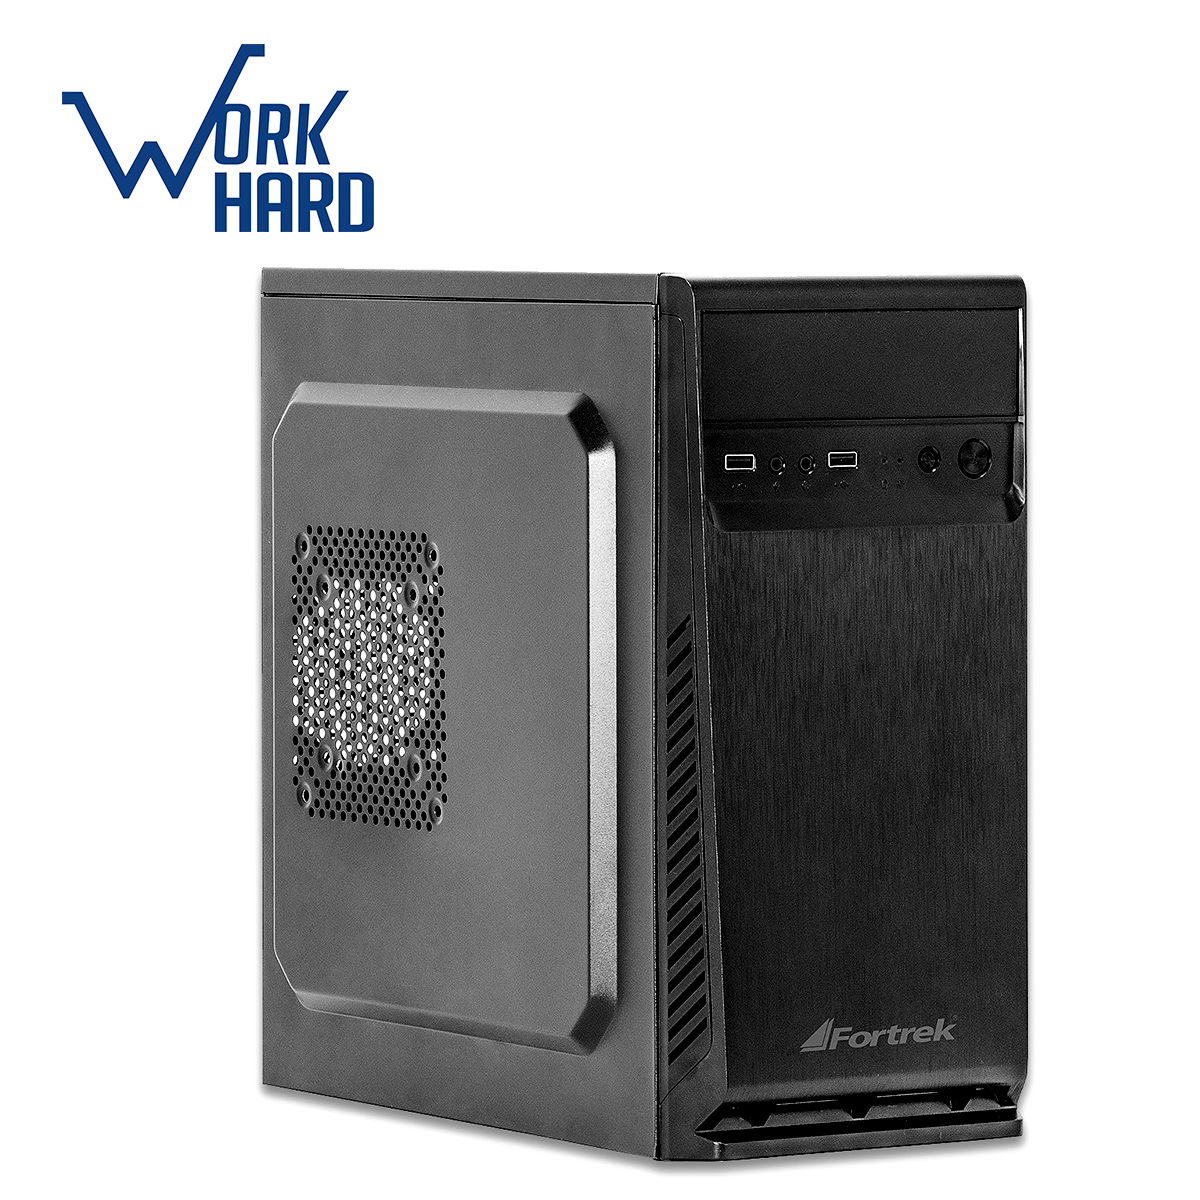 Computador Bits WorkHard - AMD FX-4300 Quad Core, 4GB, HD 500GB, FreeDos - 2 Anos de garantia